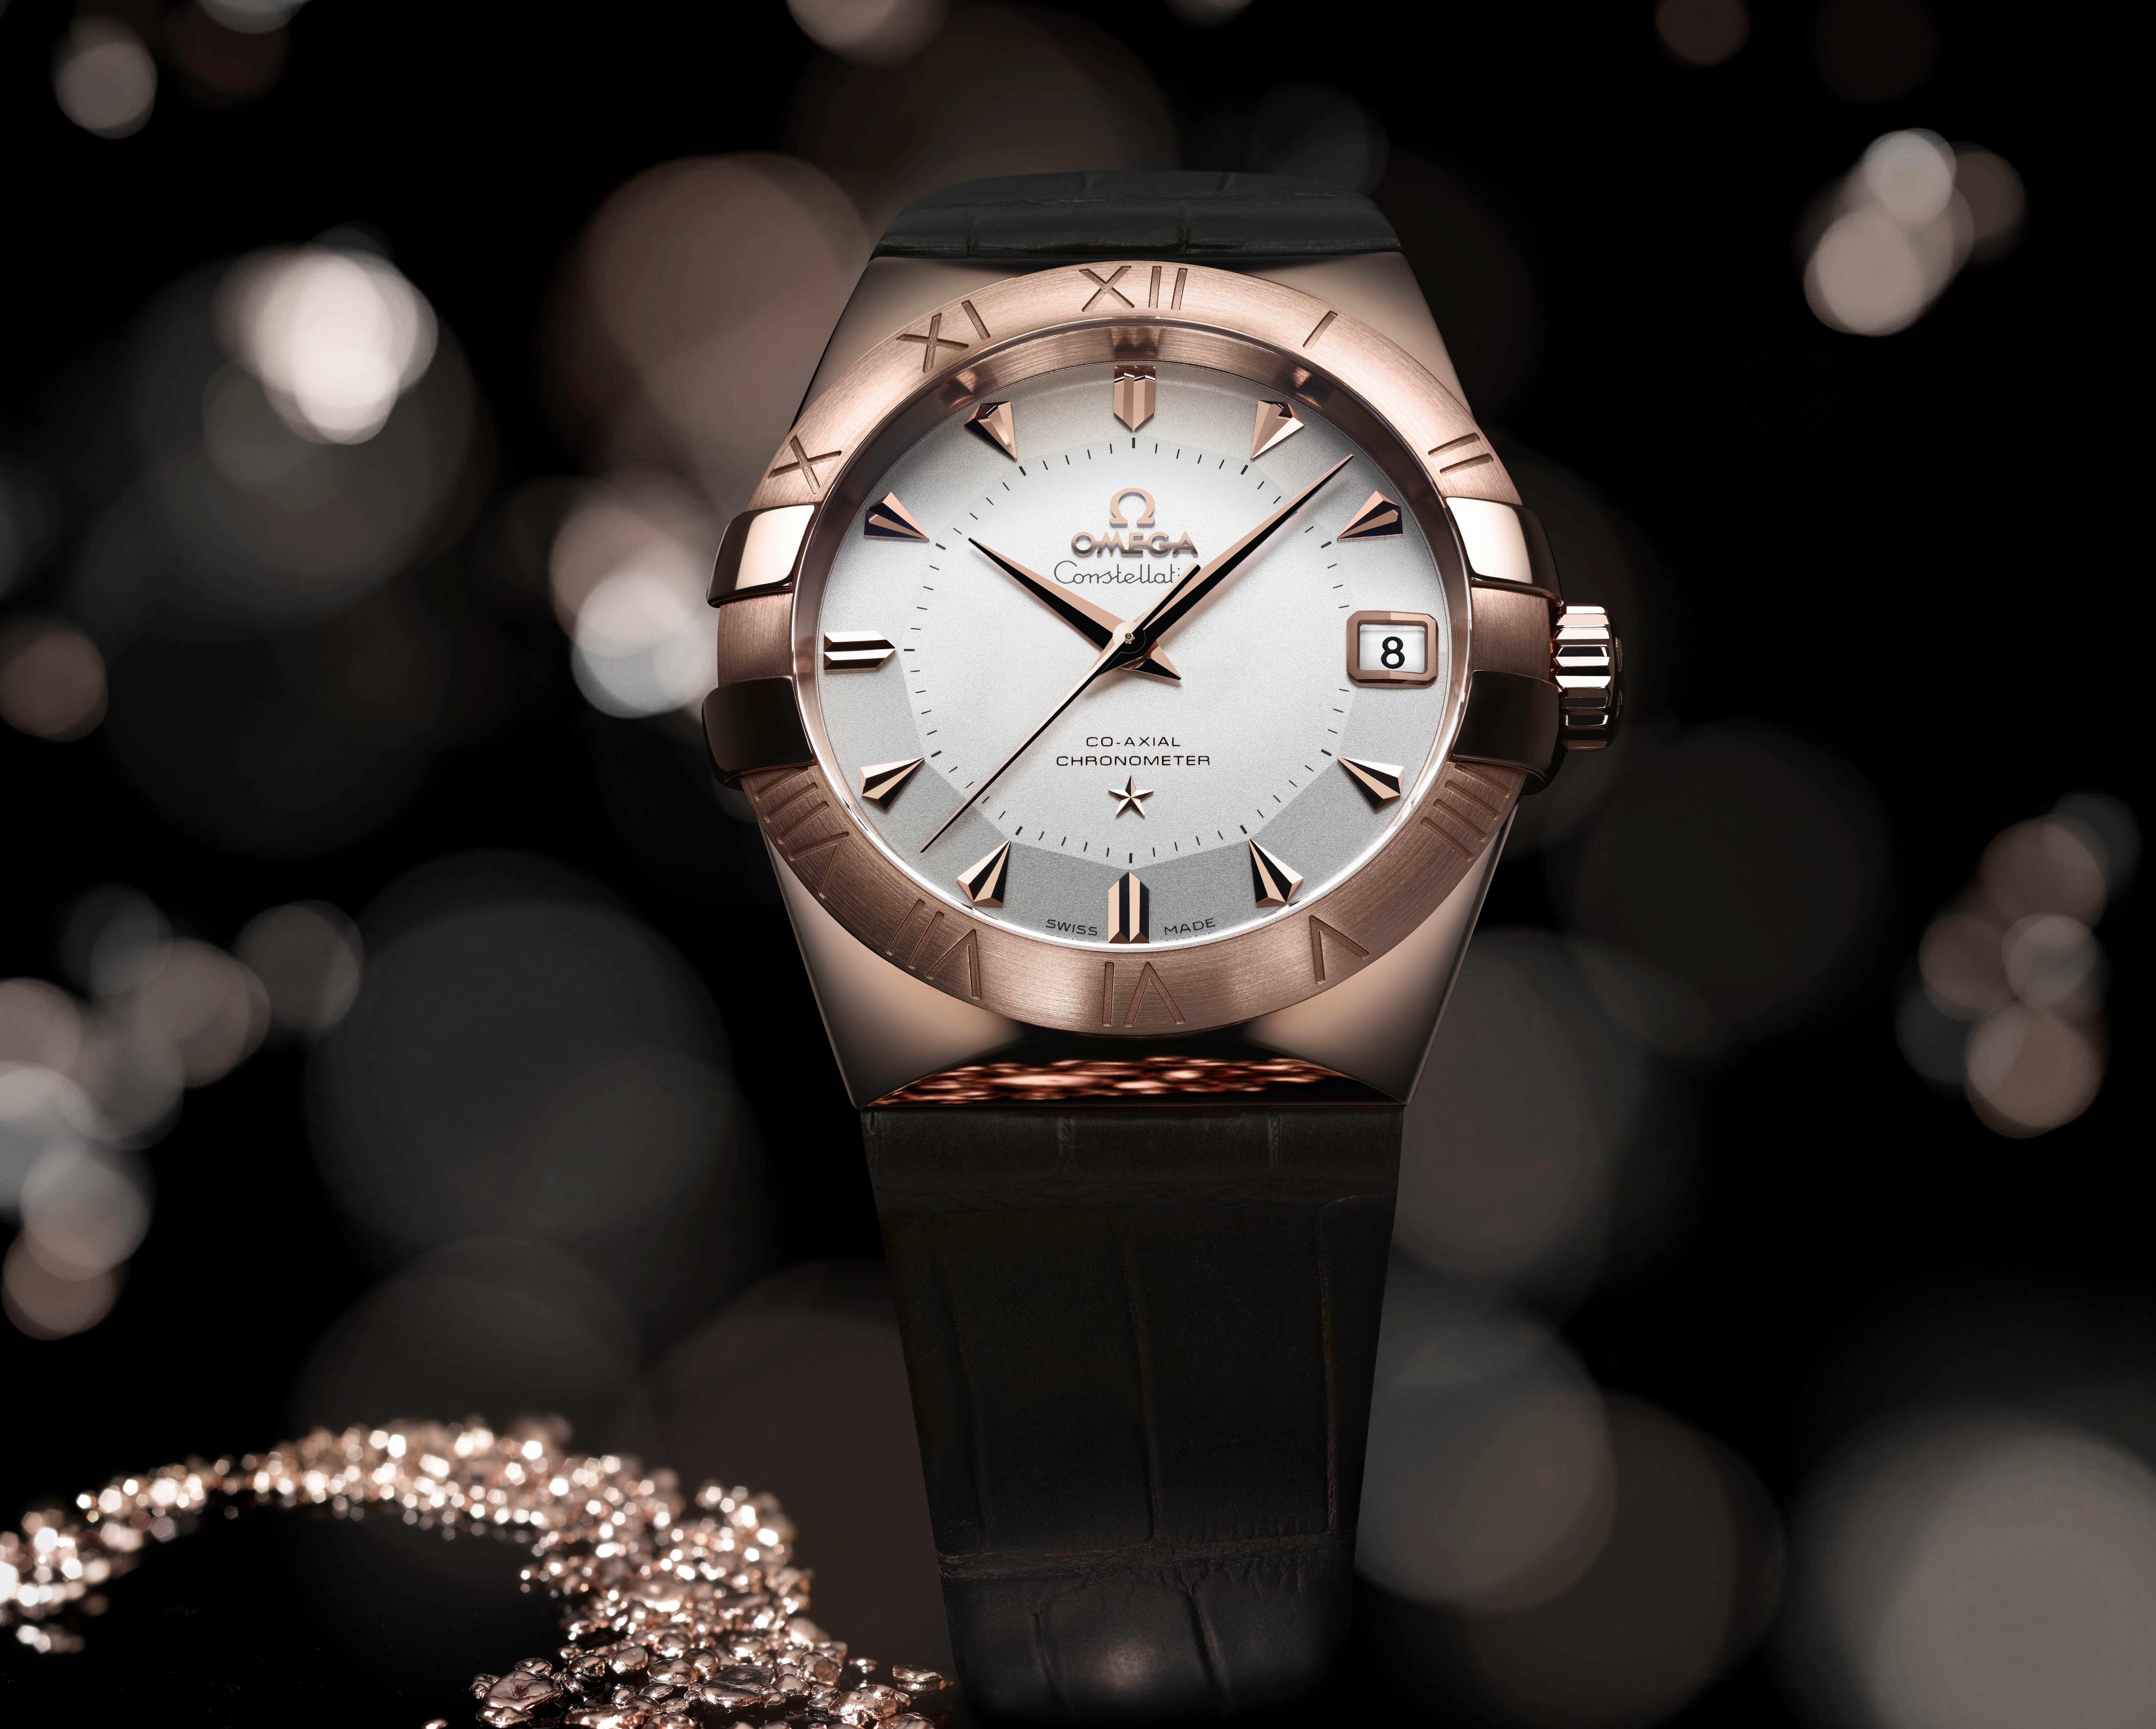 Реклама наручных часов. Обои Omega Constellation. Швейцарские часы. Красивые часы. Наручные часы реклама.